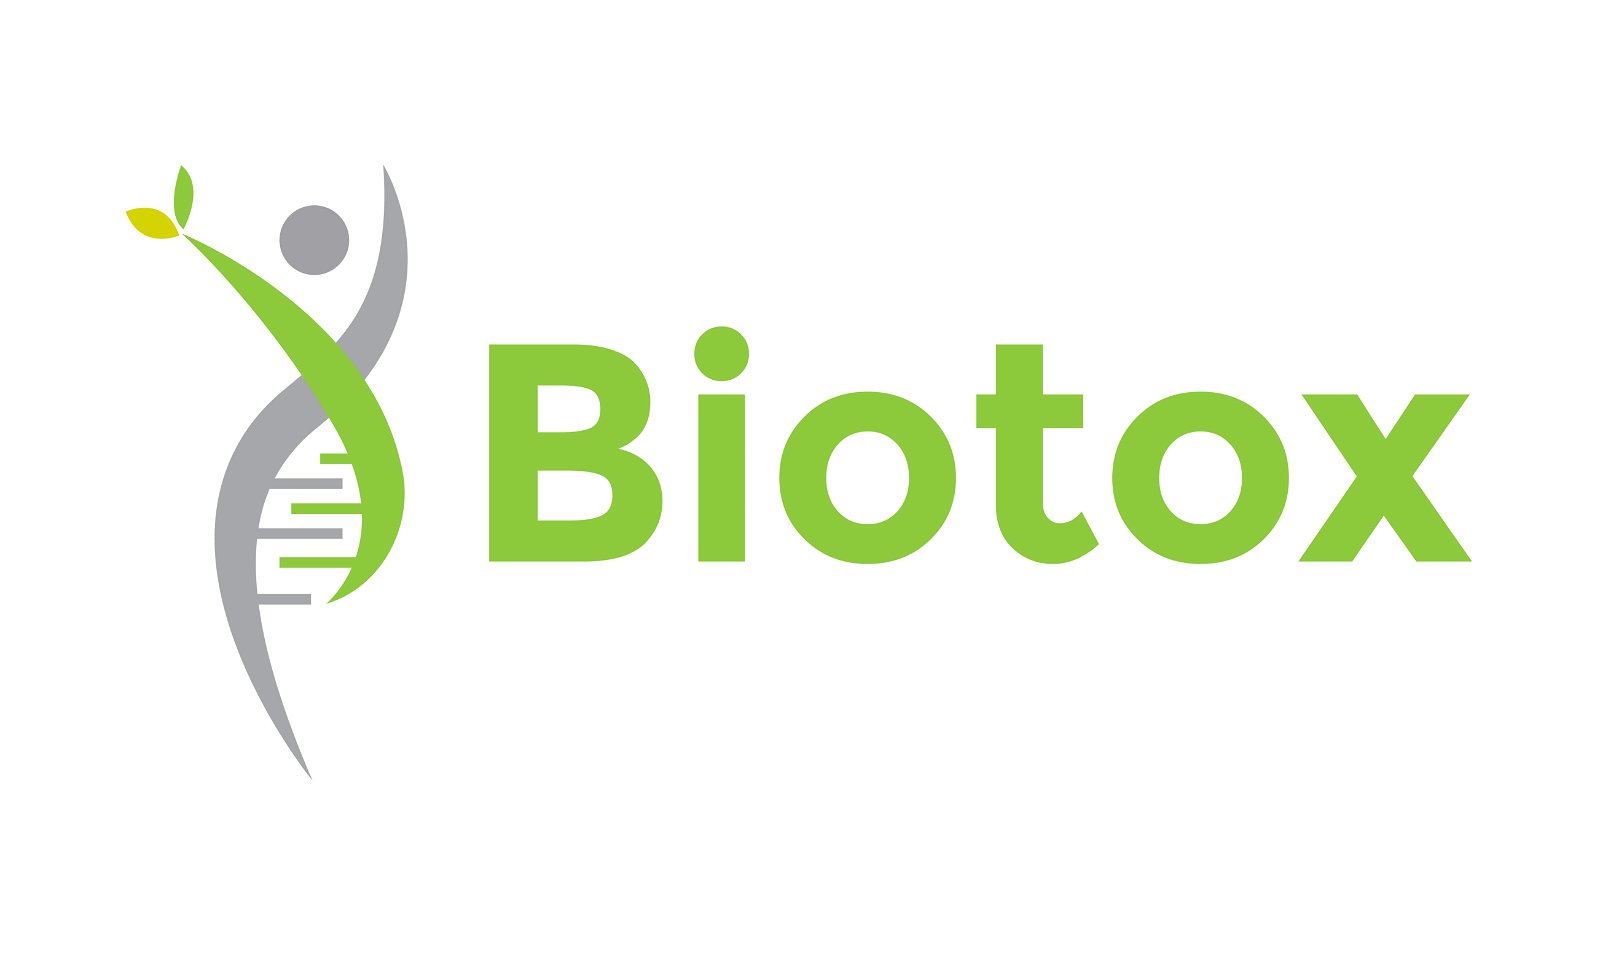 Biotox.com - Creative brandable domain for sale